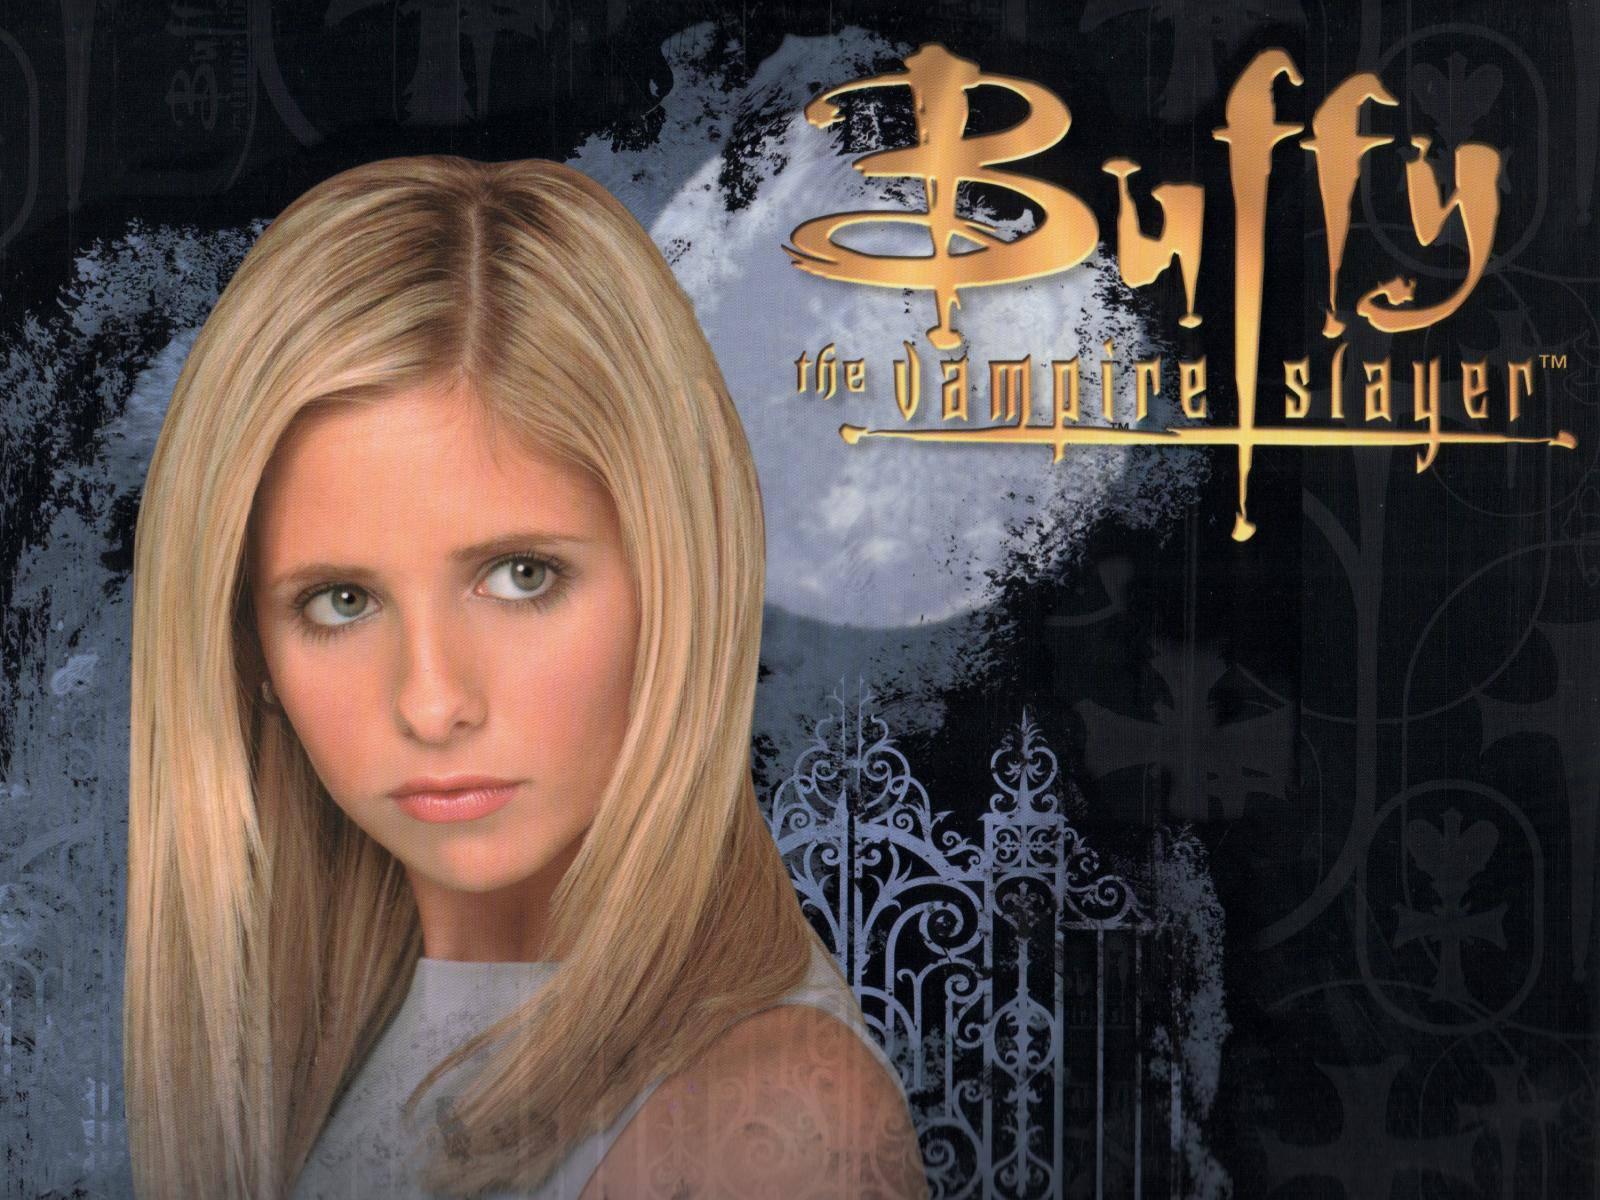 Buffy The Vampire Slayer wallpaper, Comics, HQ Buffy The Vampire Slayer pictureK Wallpaper 2019